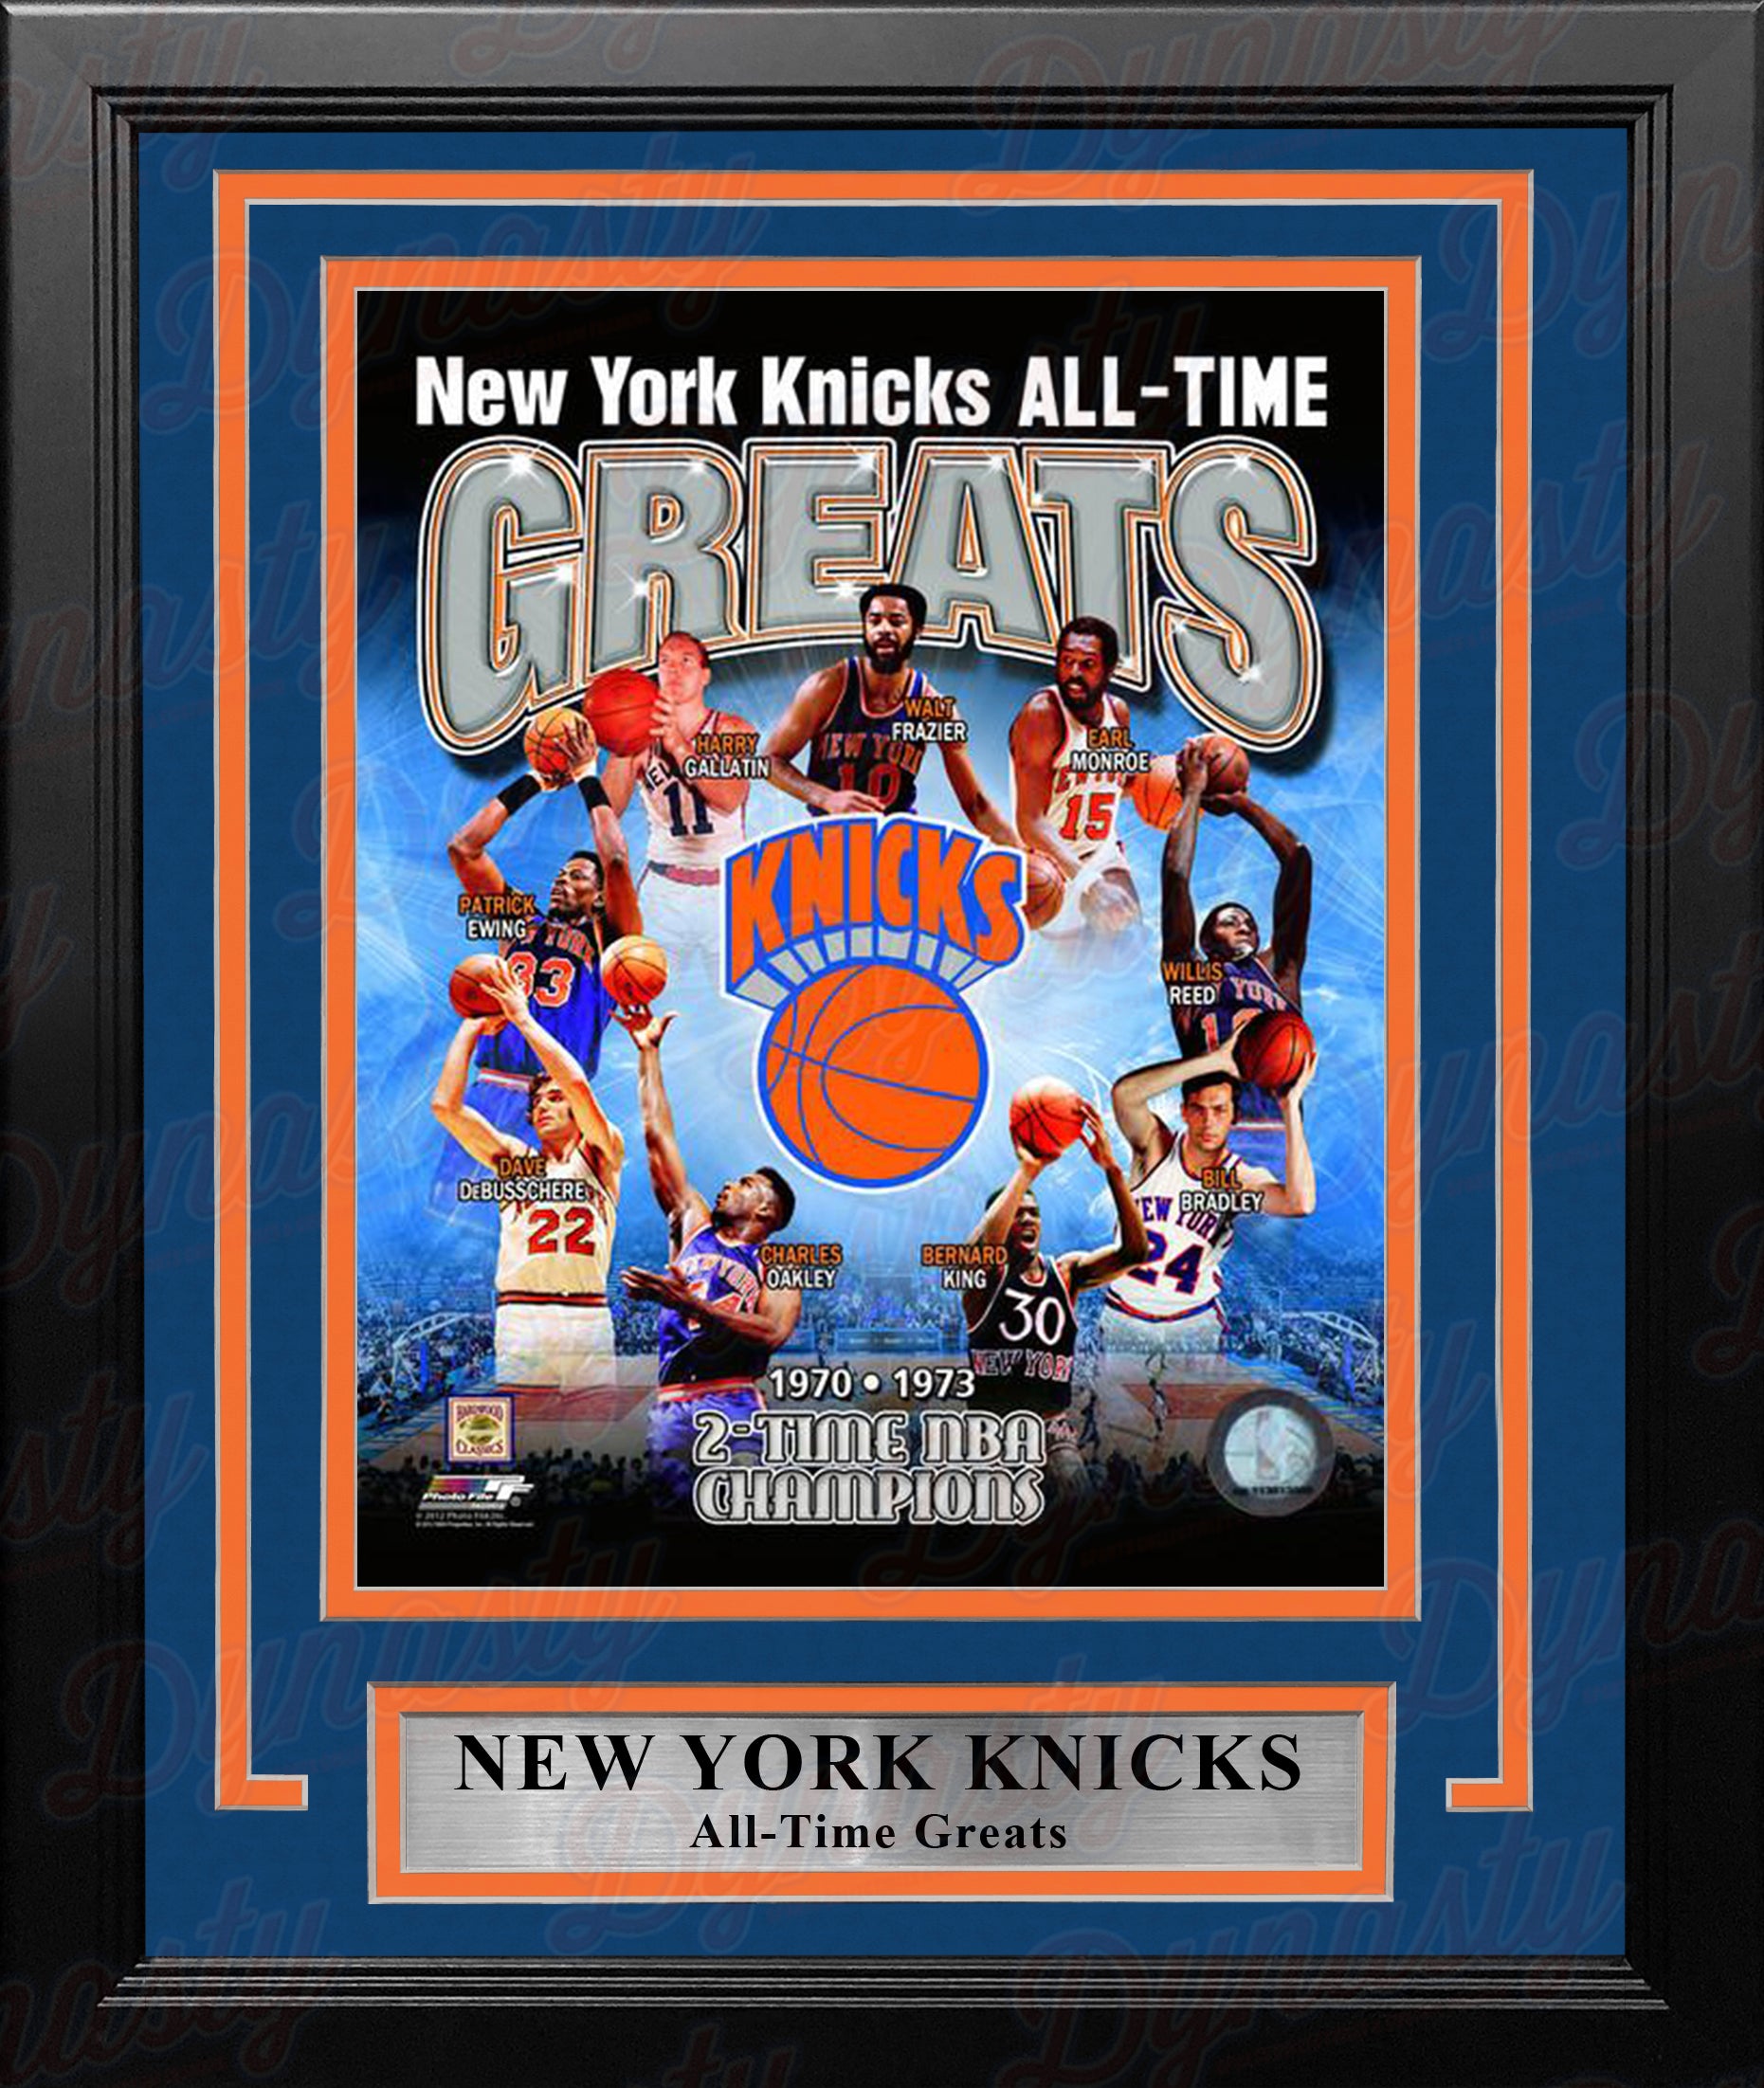 New York Knicks All-Time Greats 8" x 10" Framed Basketball Photo - Dynasty Sports & Framing 